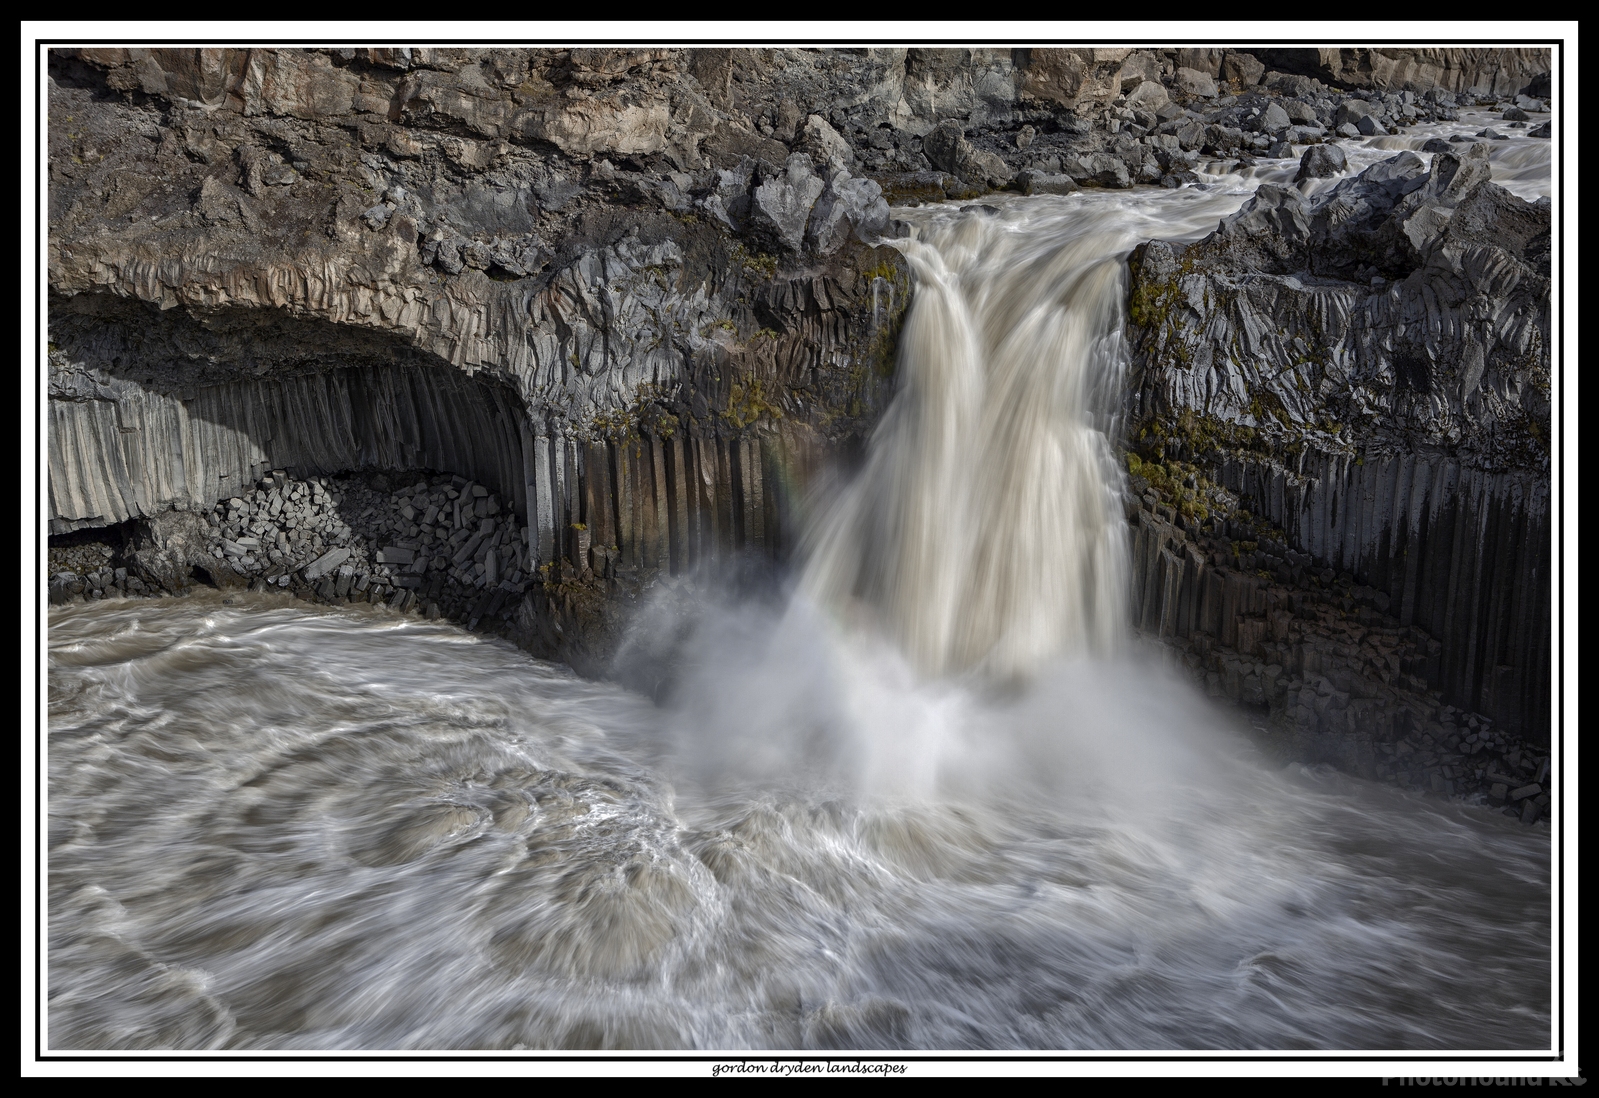 Image of Aldeyjarfoss Waterfall by Gordon Dryden